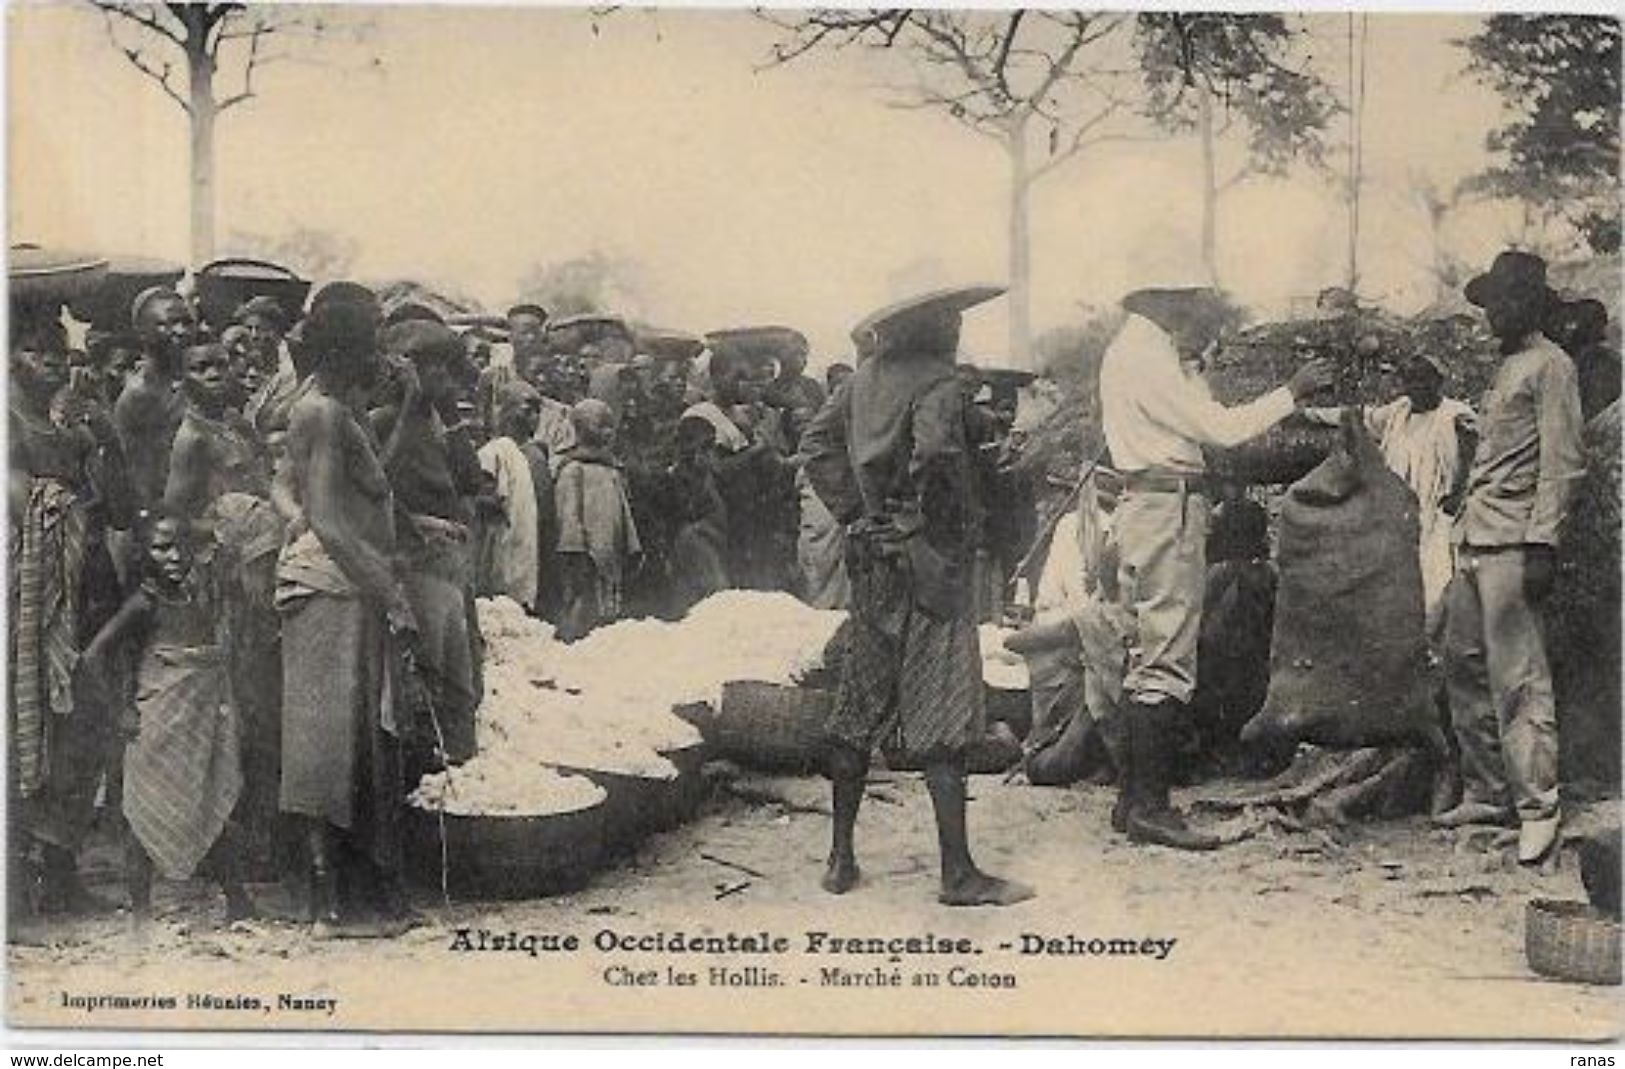 CPA Dahomey Afrique Noire Type Ethnic Métier Marché  Non Circulé - Dahomey